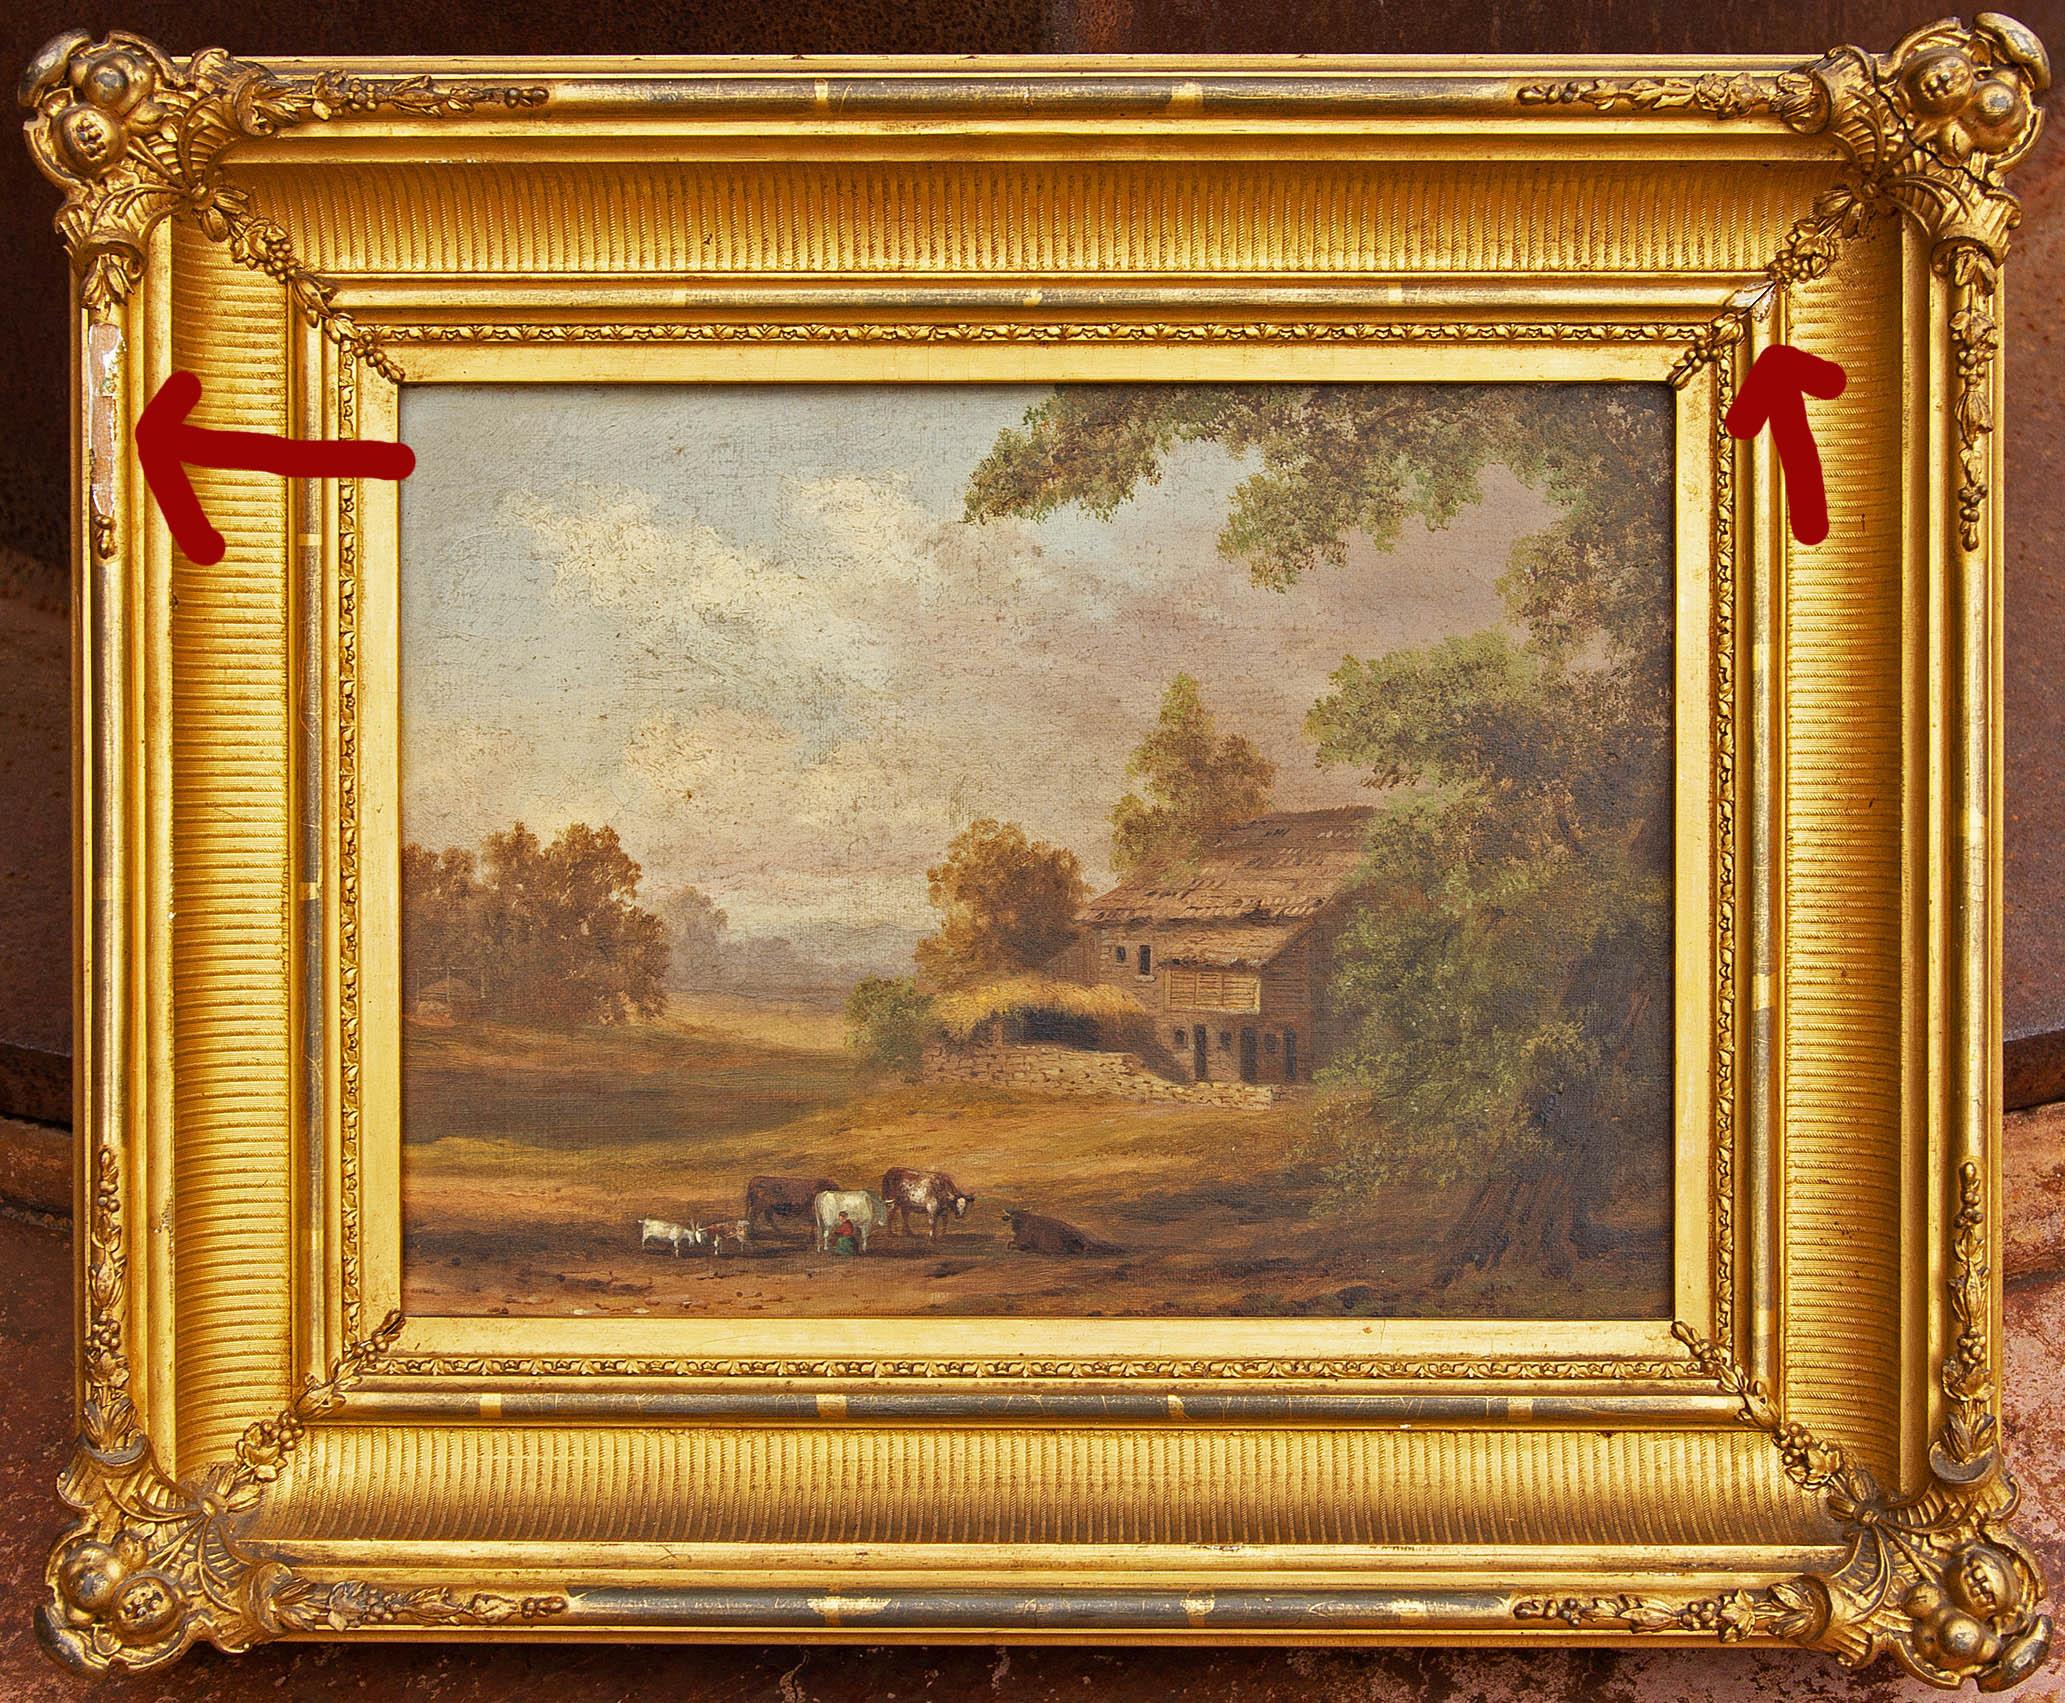 Canvas Hudson River School Painting in Original Gilt Frame